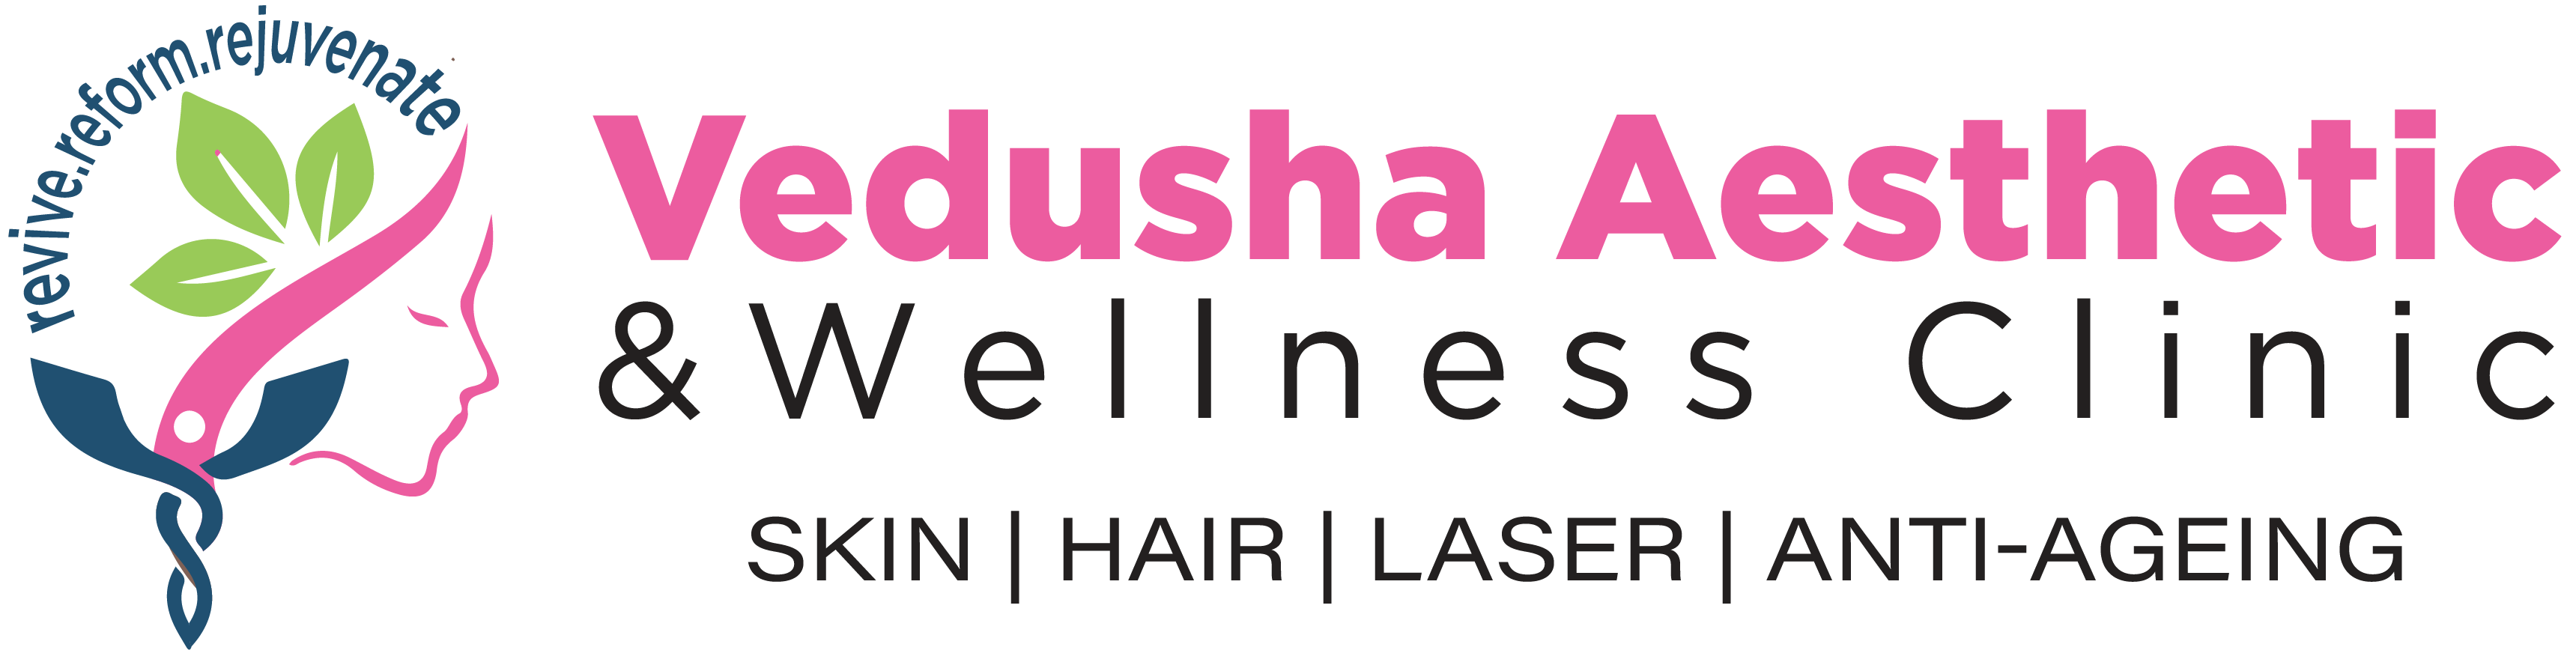 Vedusha Aesthetic & Wellness Clinic